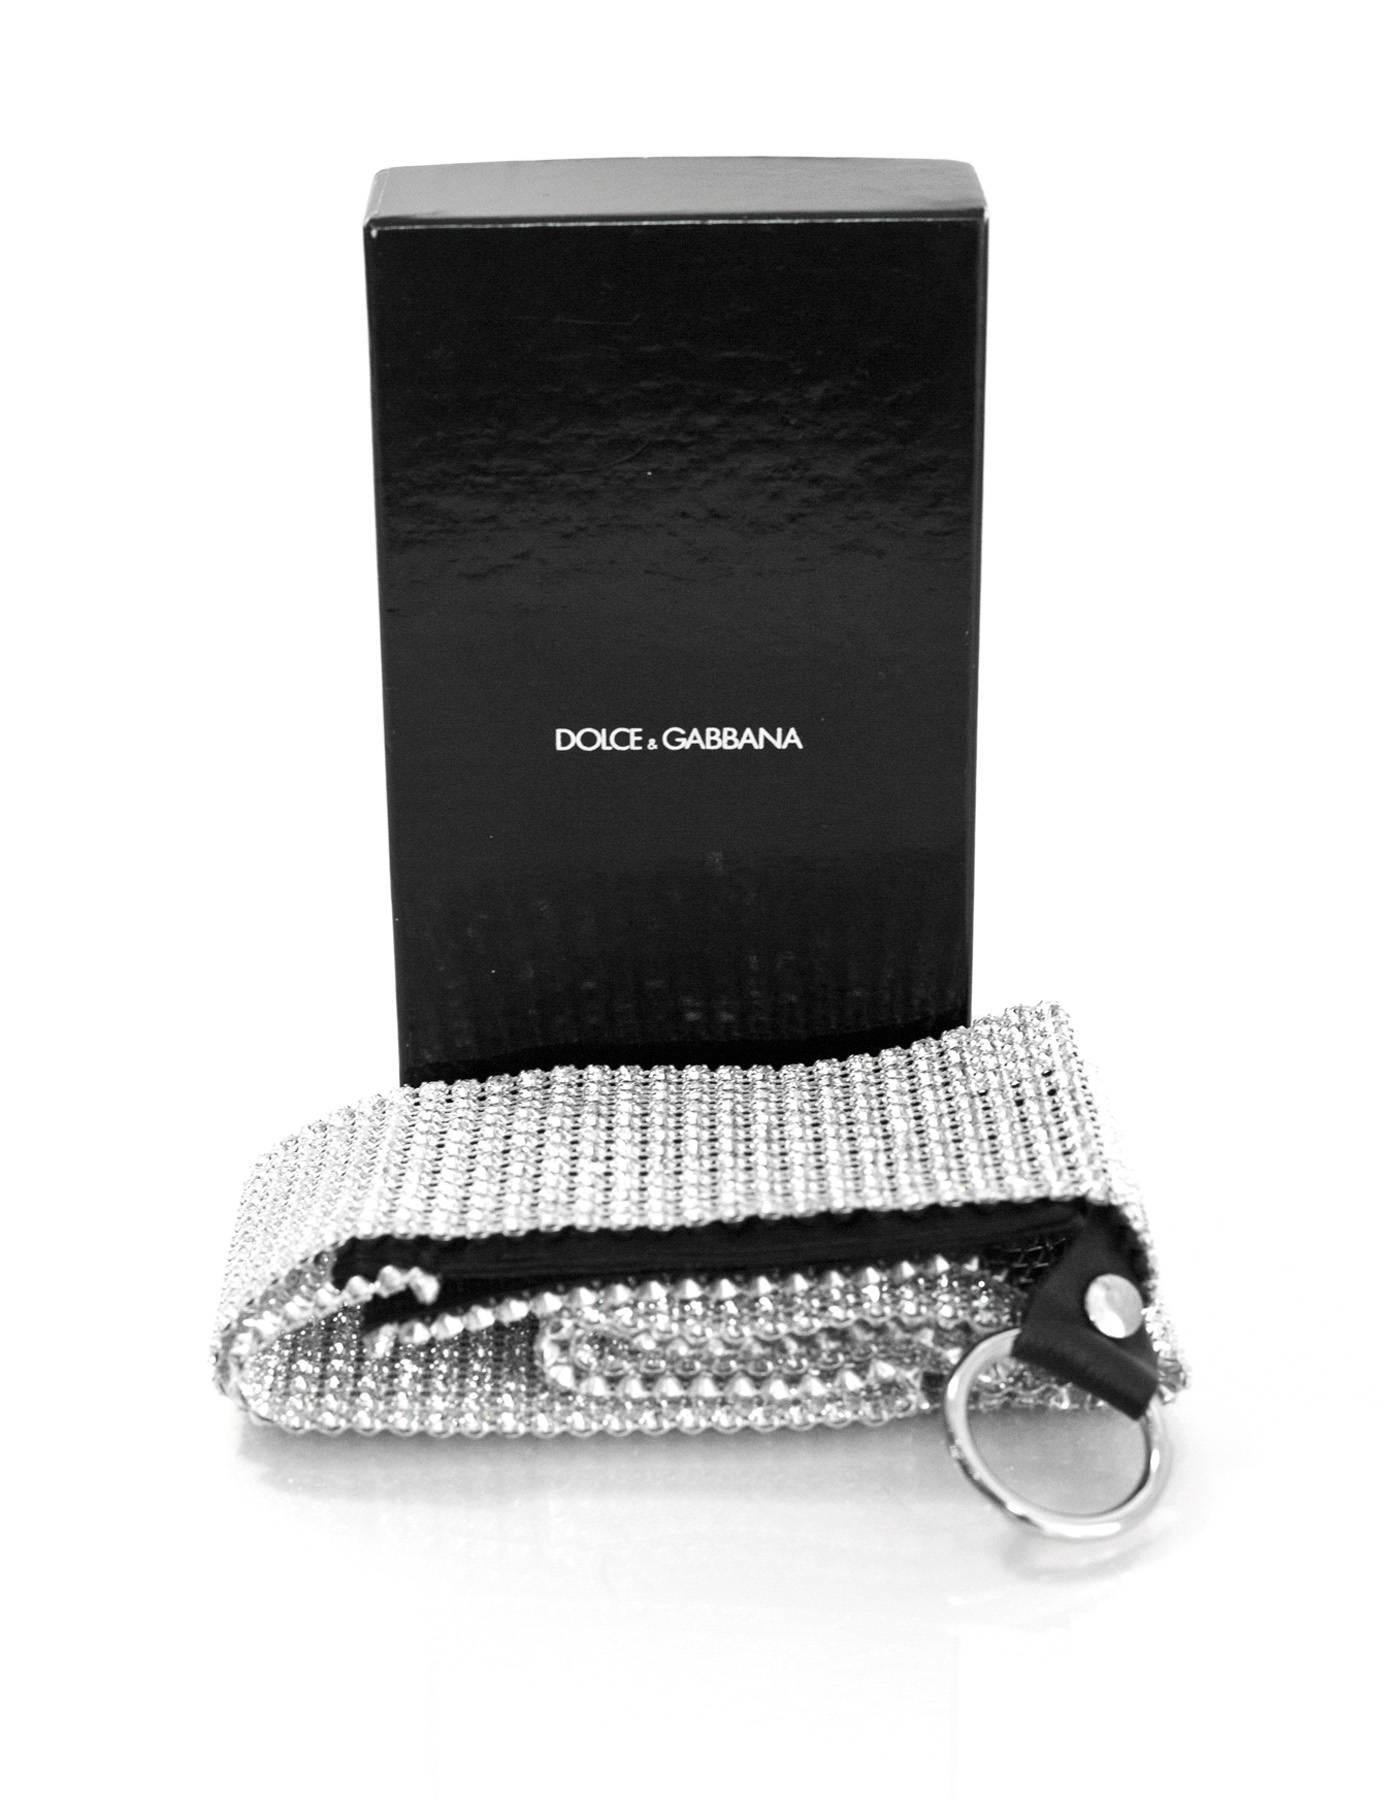 Gray Dolce & Gabbana Crystal Belt Sz 40 with Box